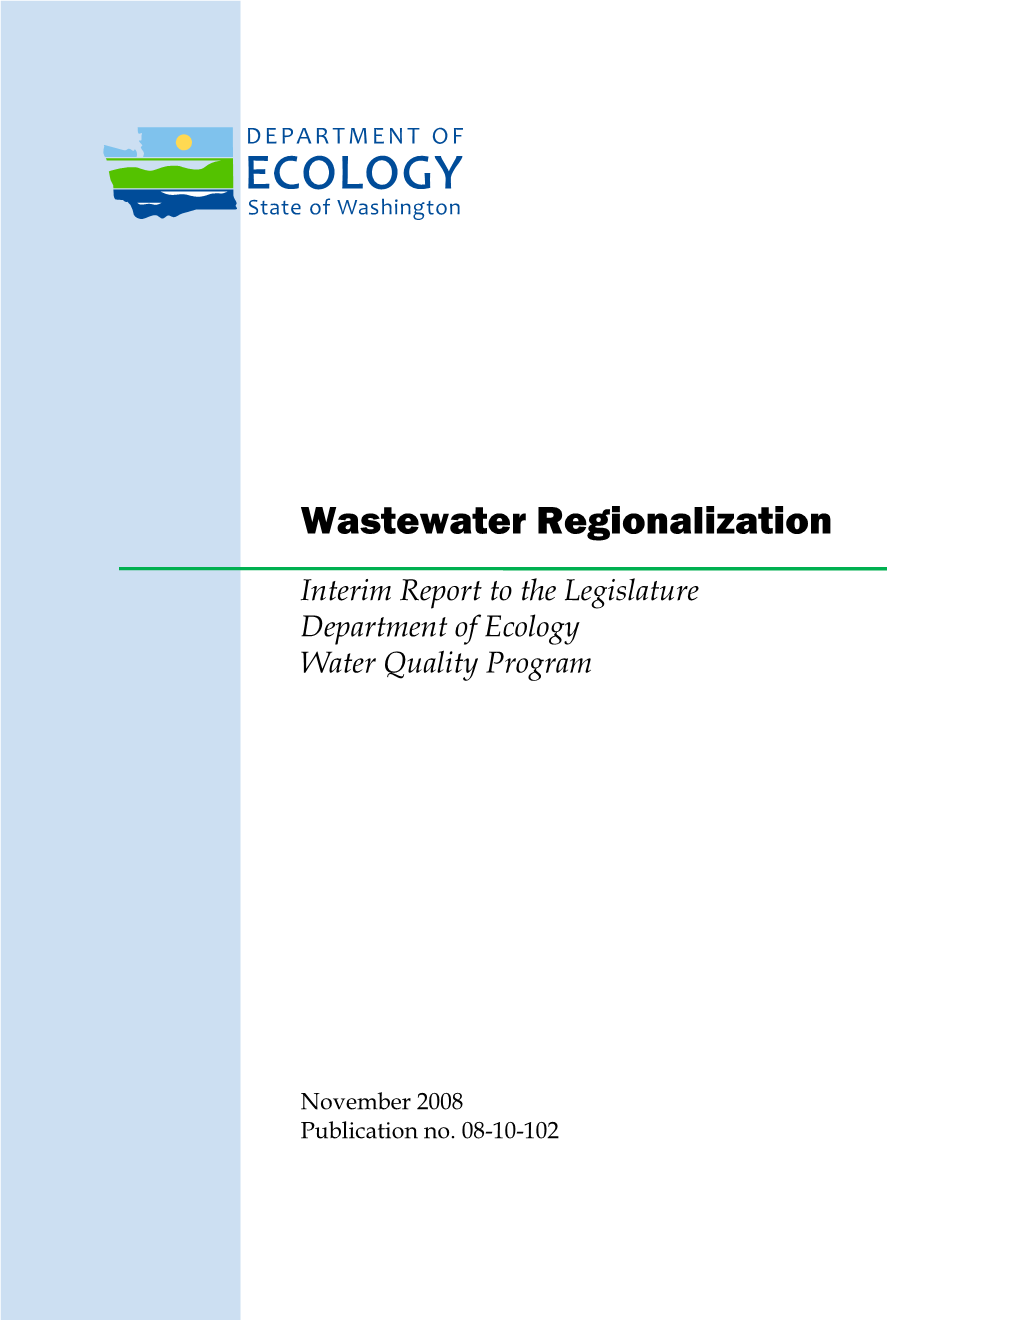 Wastewater Regionalization: Interim Report to the Legislature